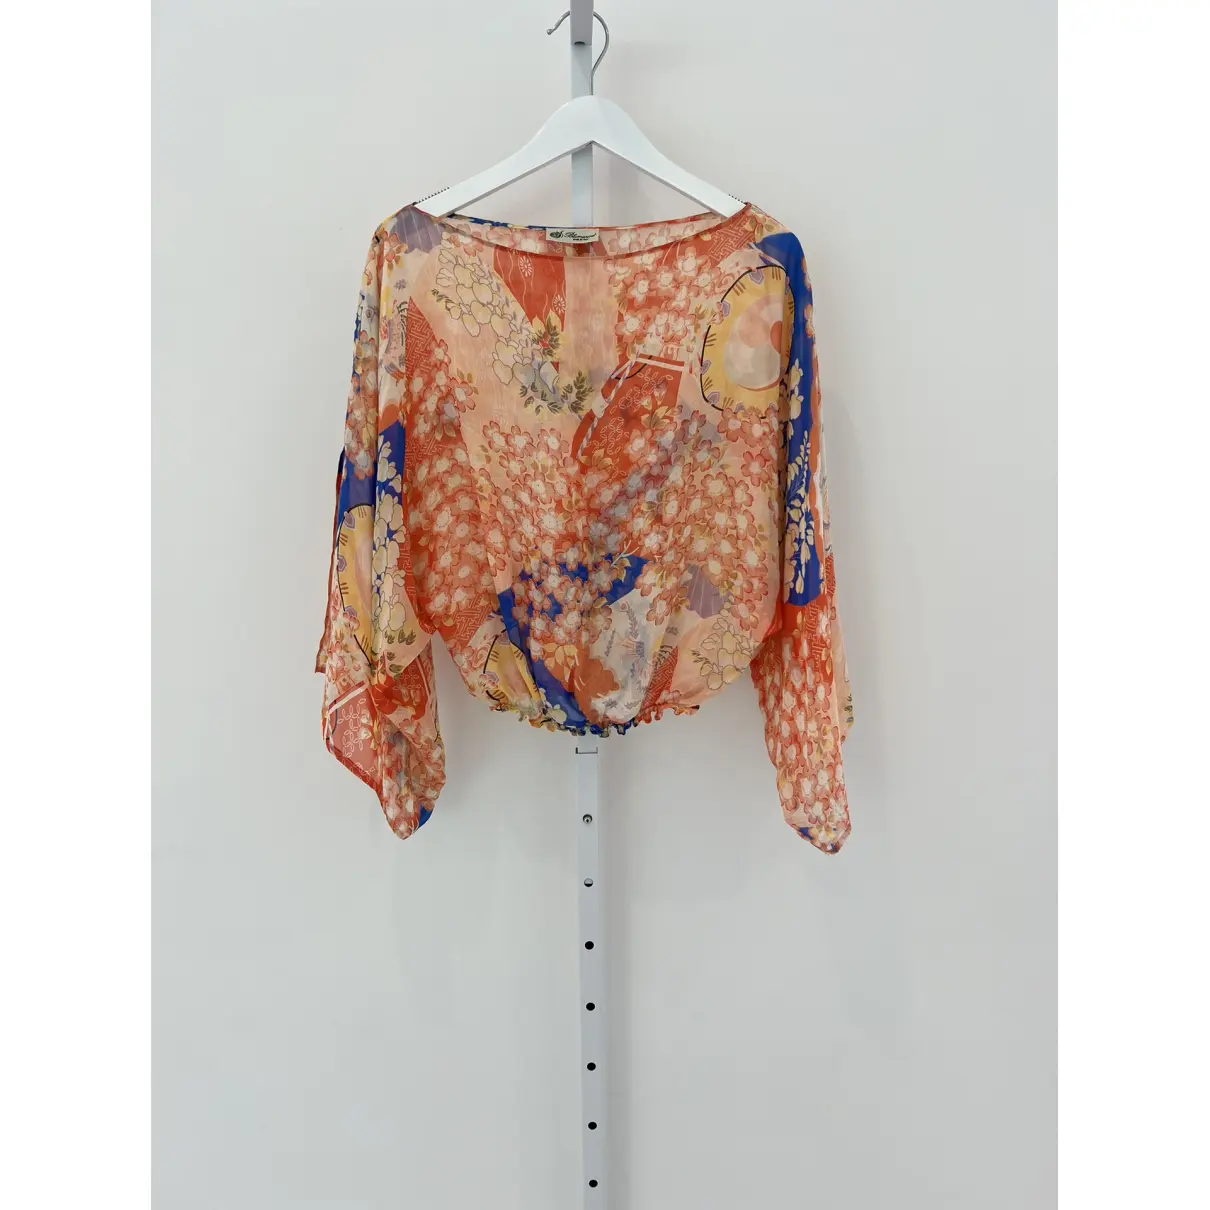 Buy Blumarine Silk blouse online